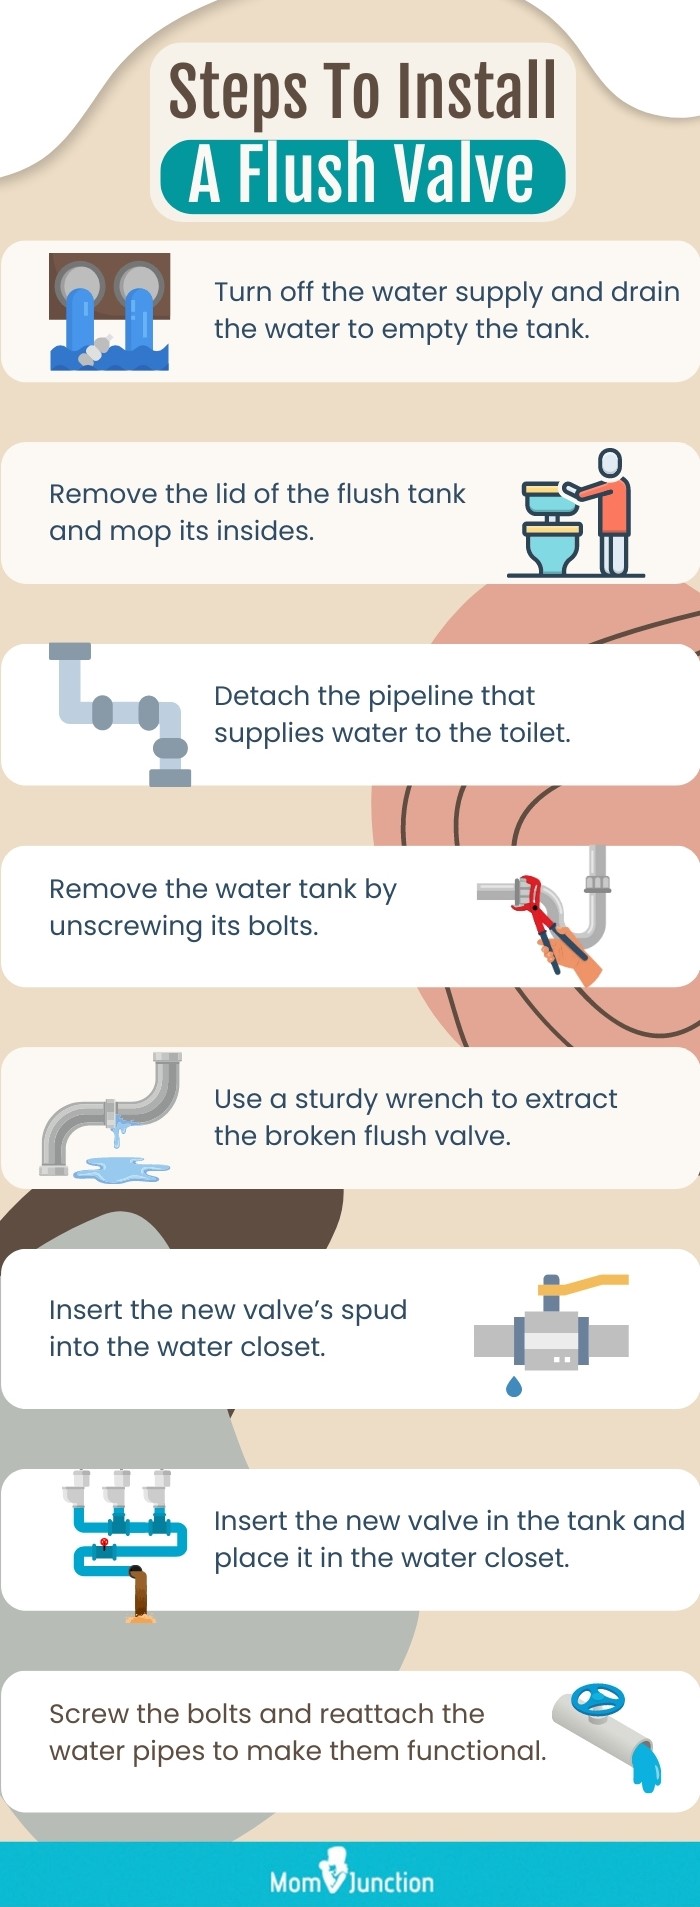 Steps To Install A Flush Valve (infographic)